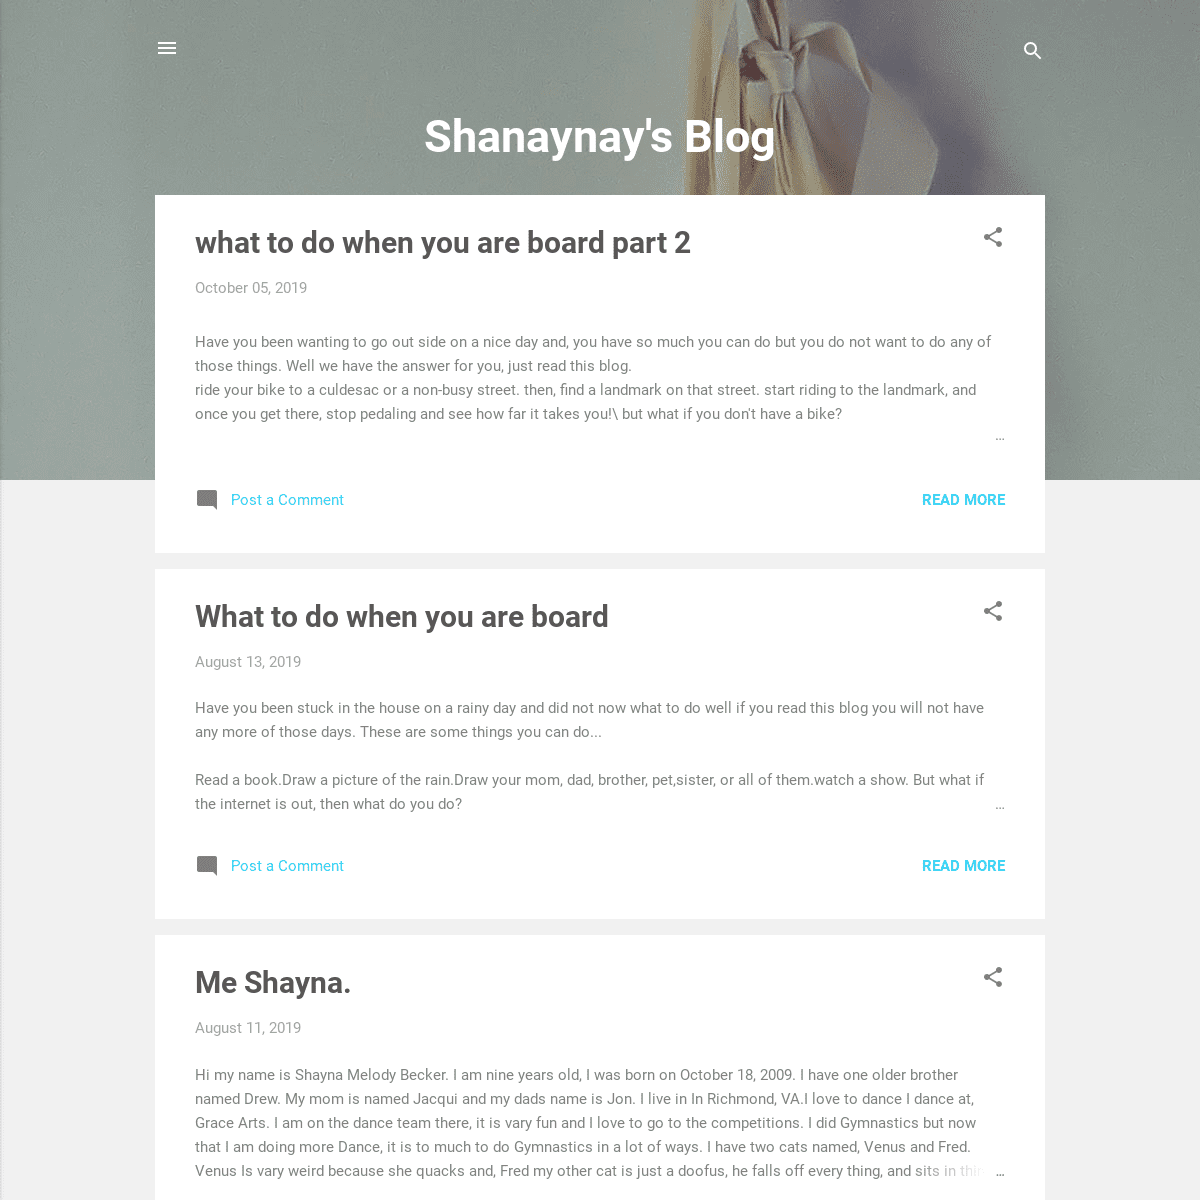 A complete backup of shanaynayb.blogspot.com